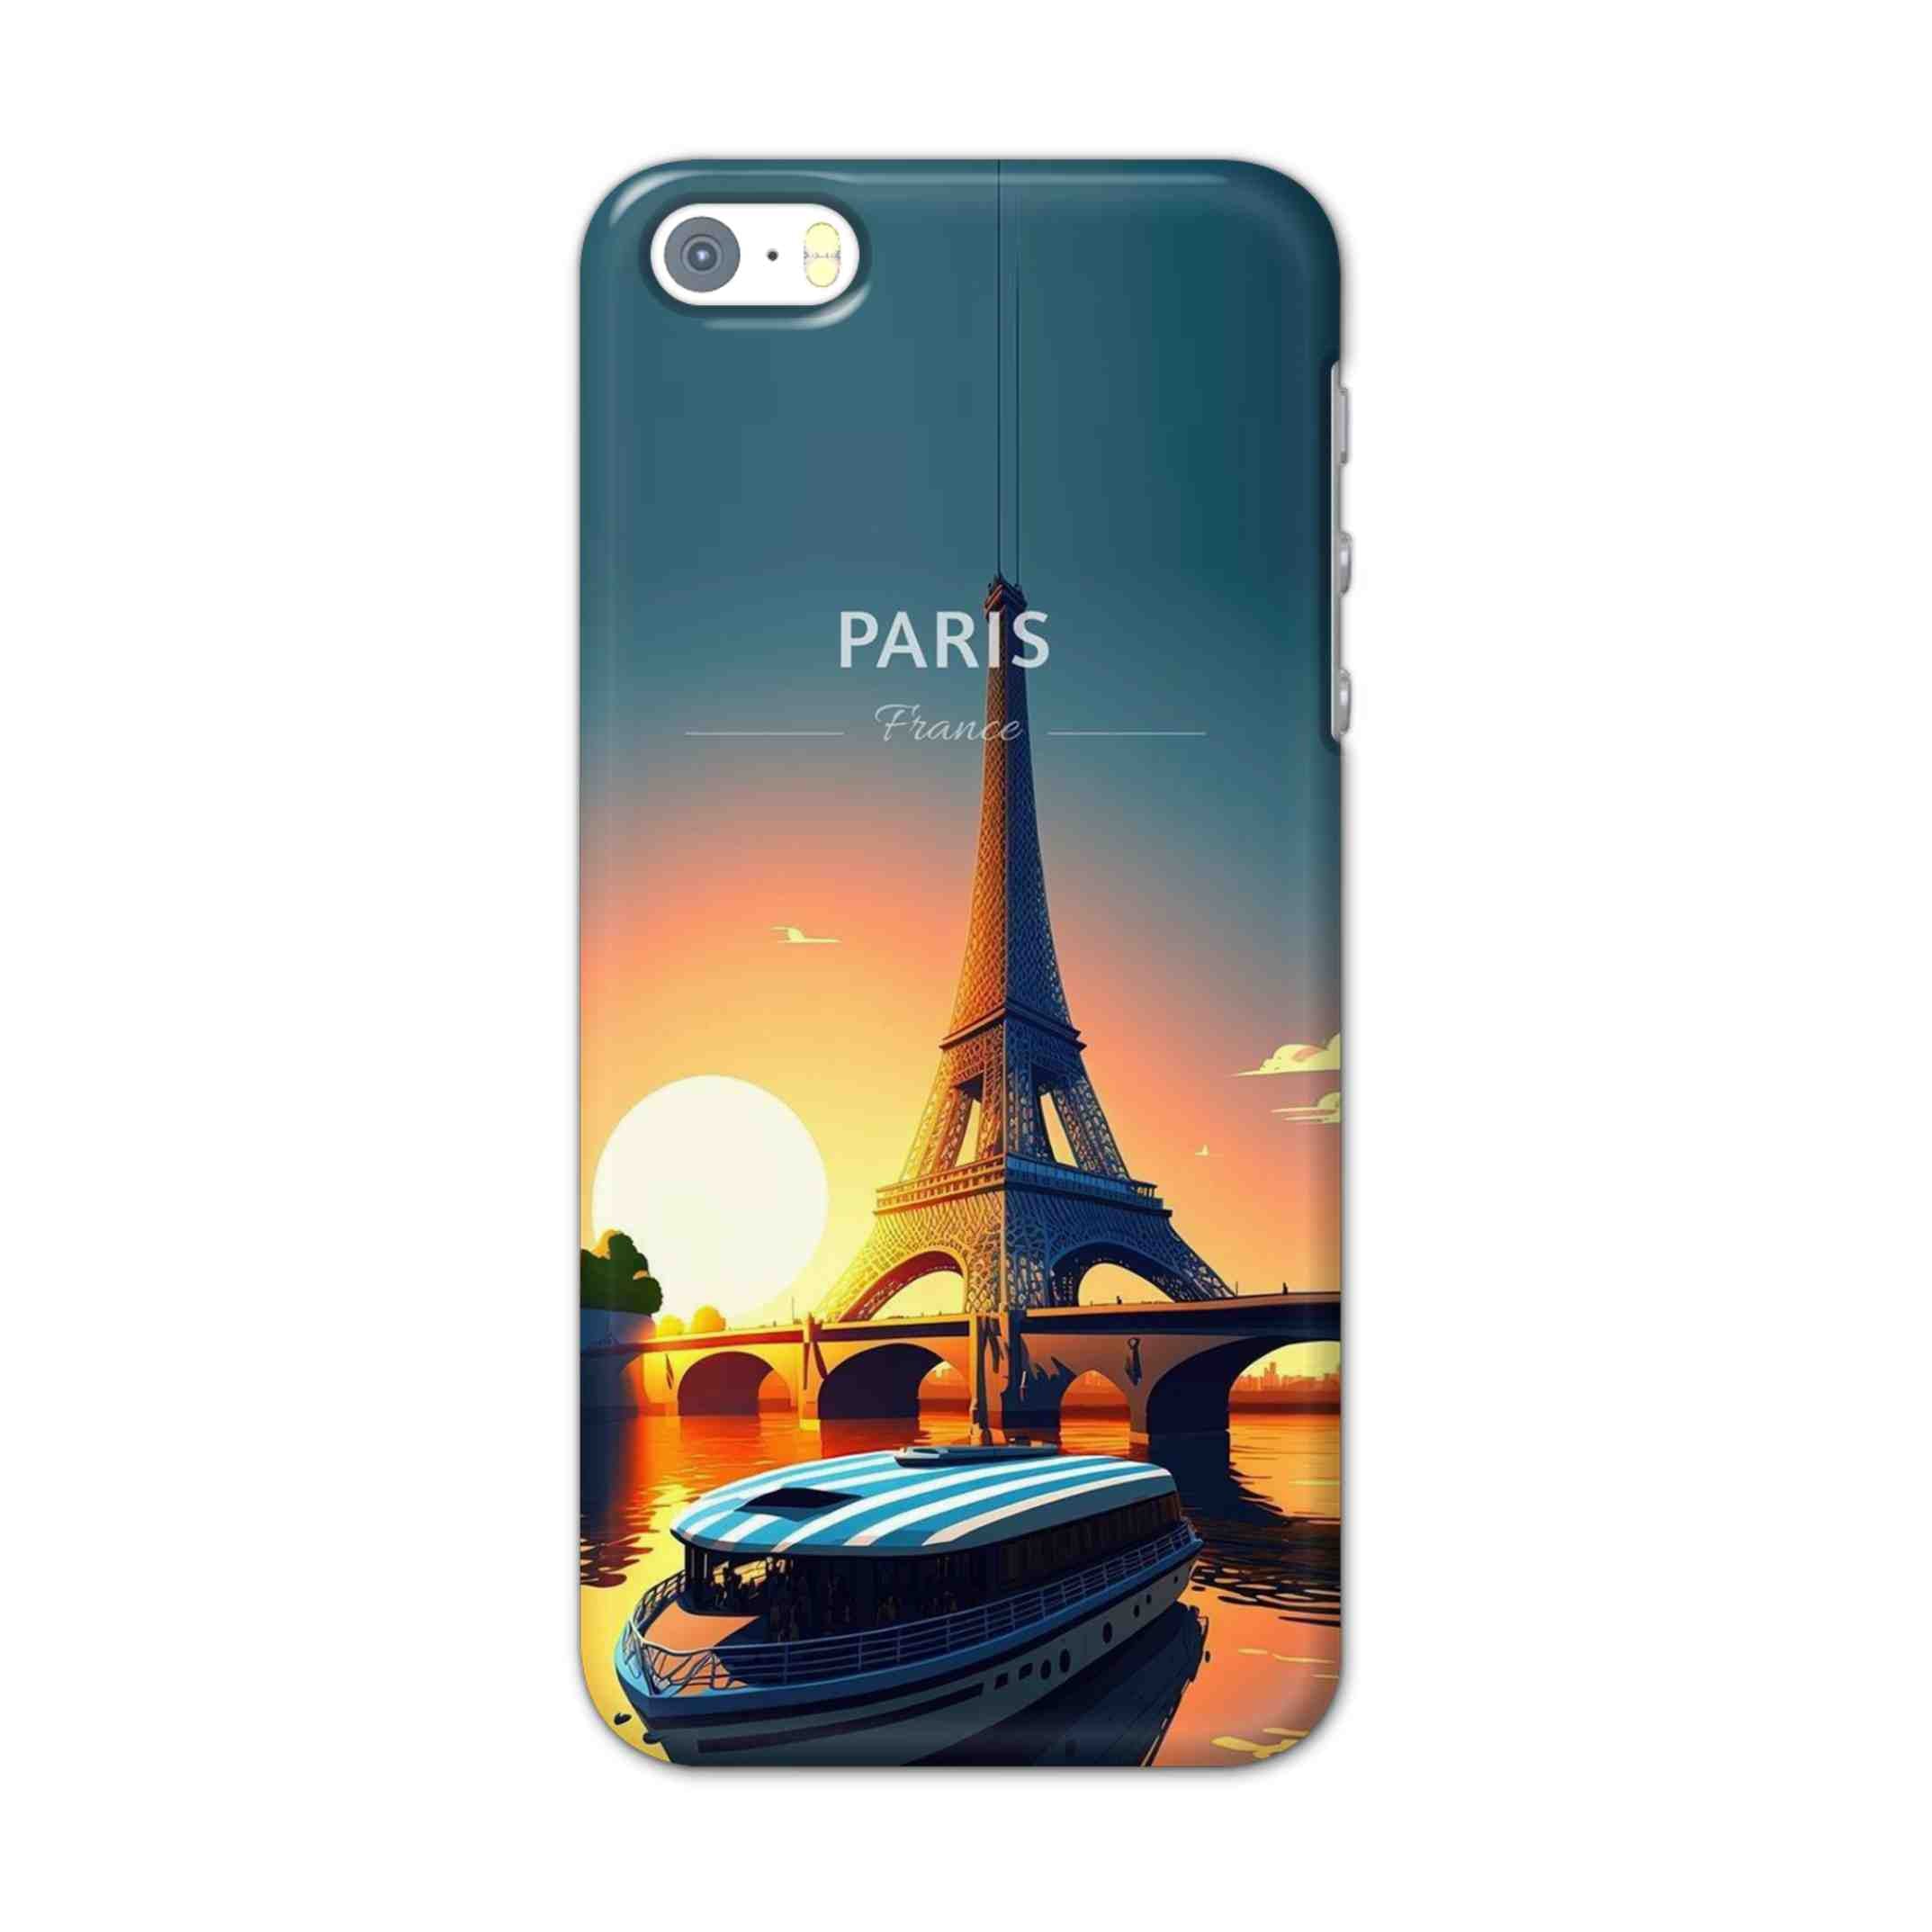 Buy France Hard Back Mobile Phone Case/Cover For Apple Iphone SE Online